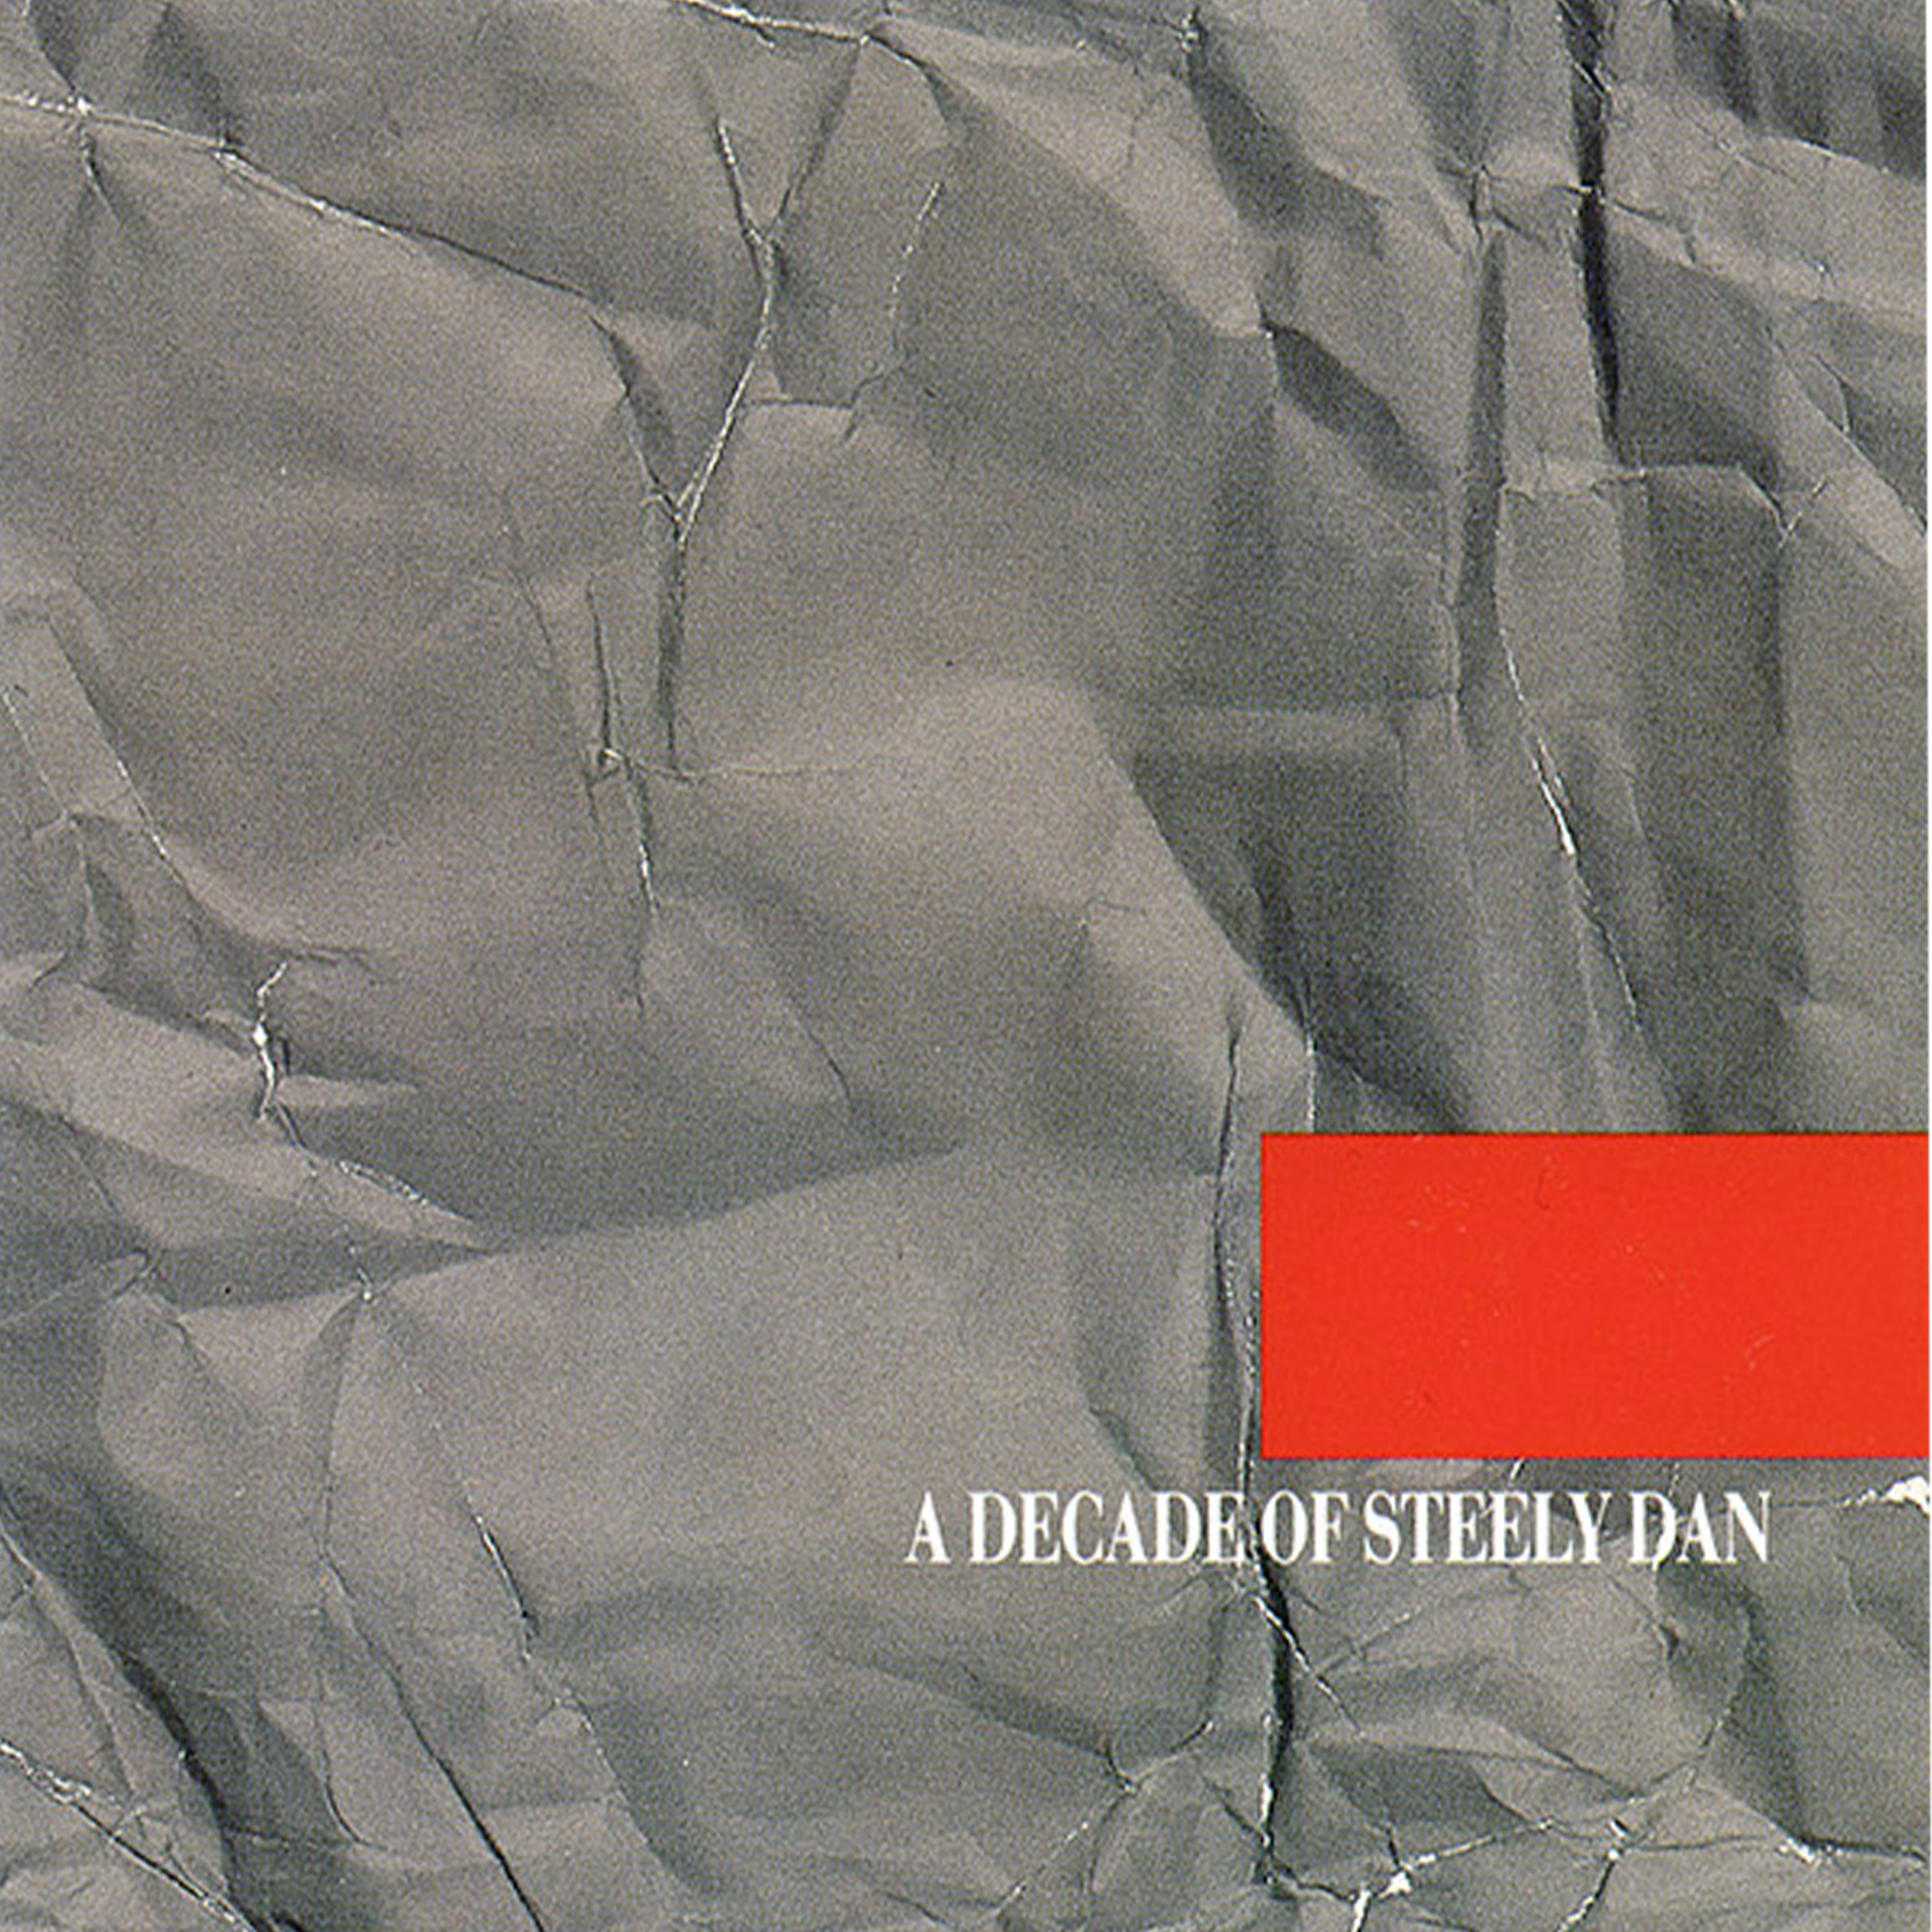 CD - Steely Dan - A Decade Of Steely Dan (USA)